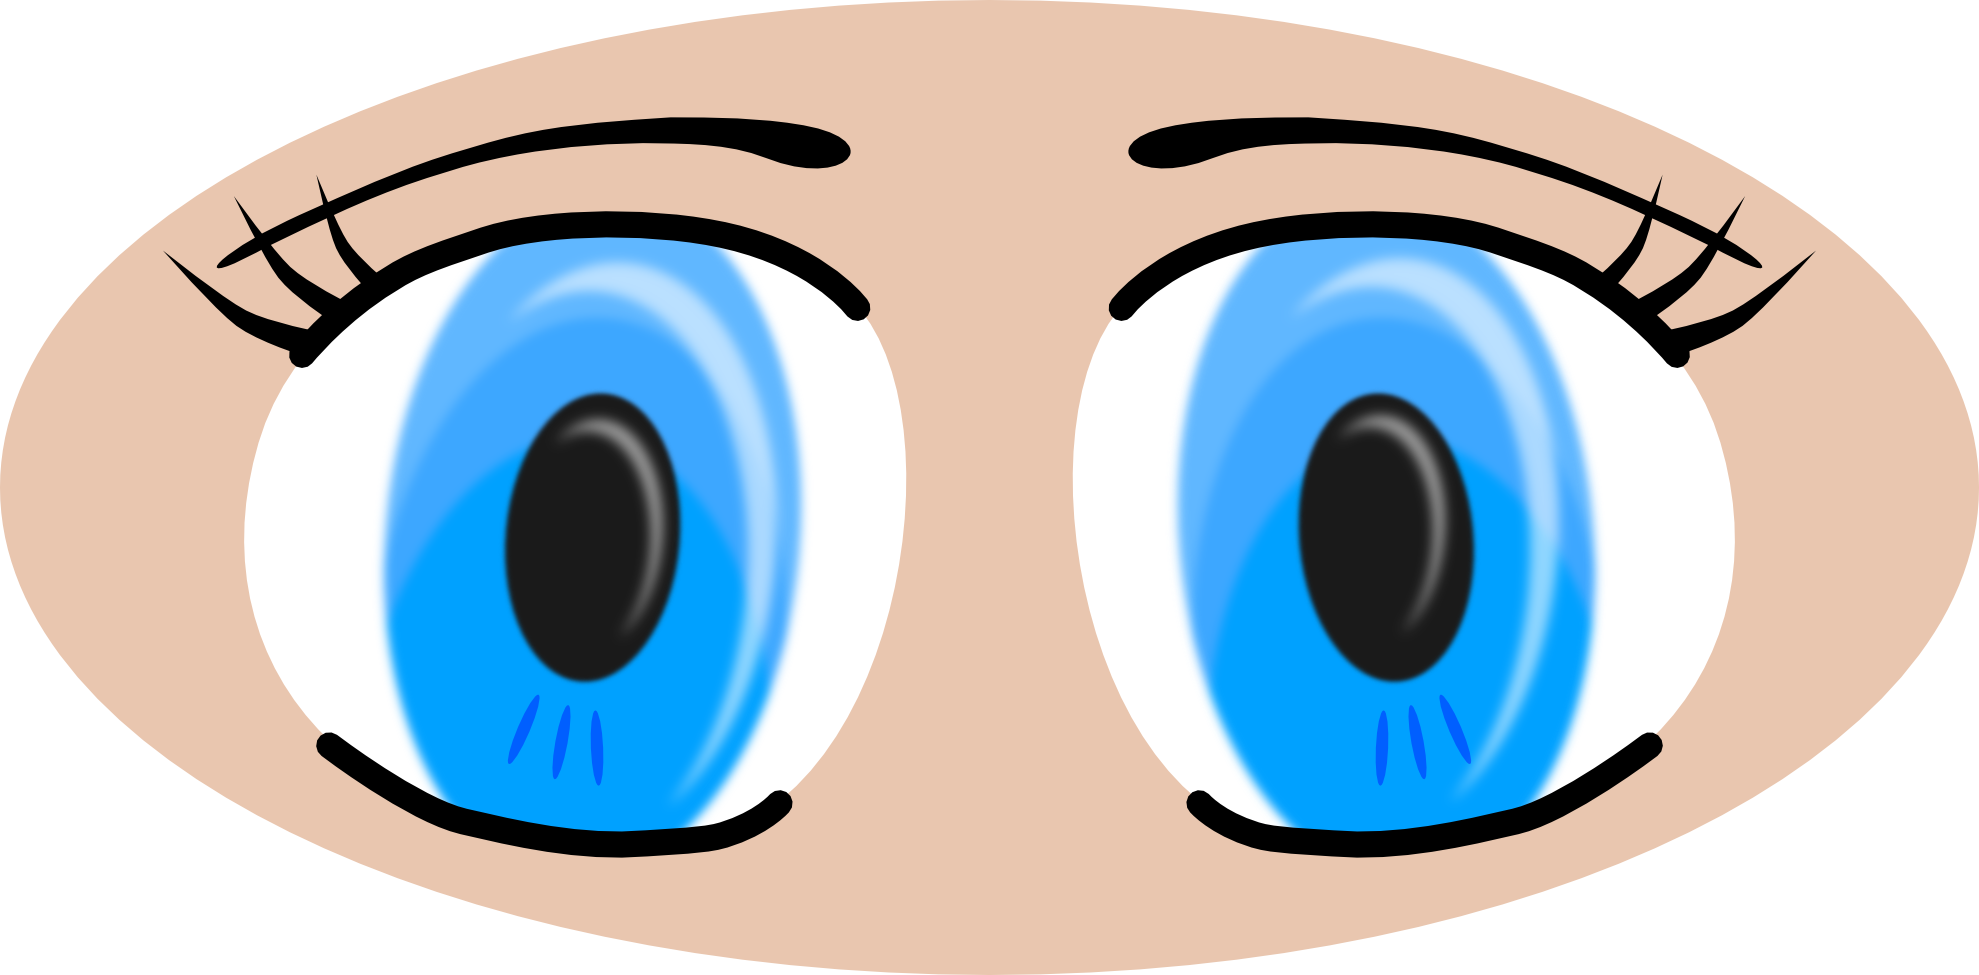 Eyeball eye clip art clipart cliparts for you image - Clipartix